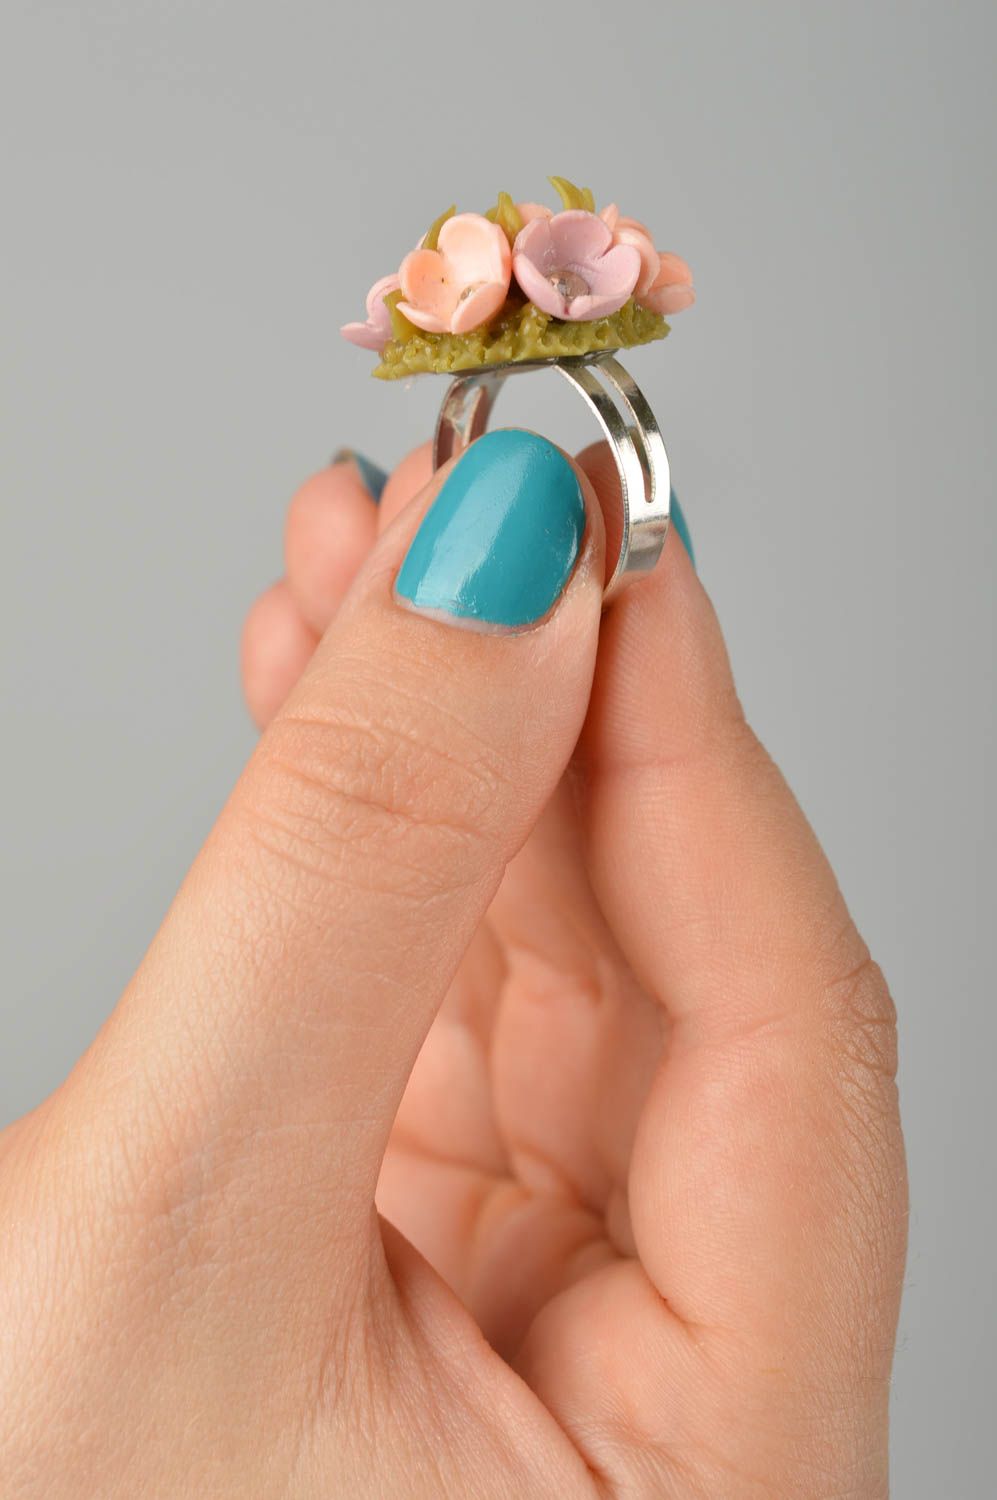 Gentle handmade flower ring artisan jewelry designs handmade gifts for her photo 3